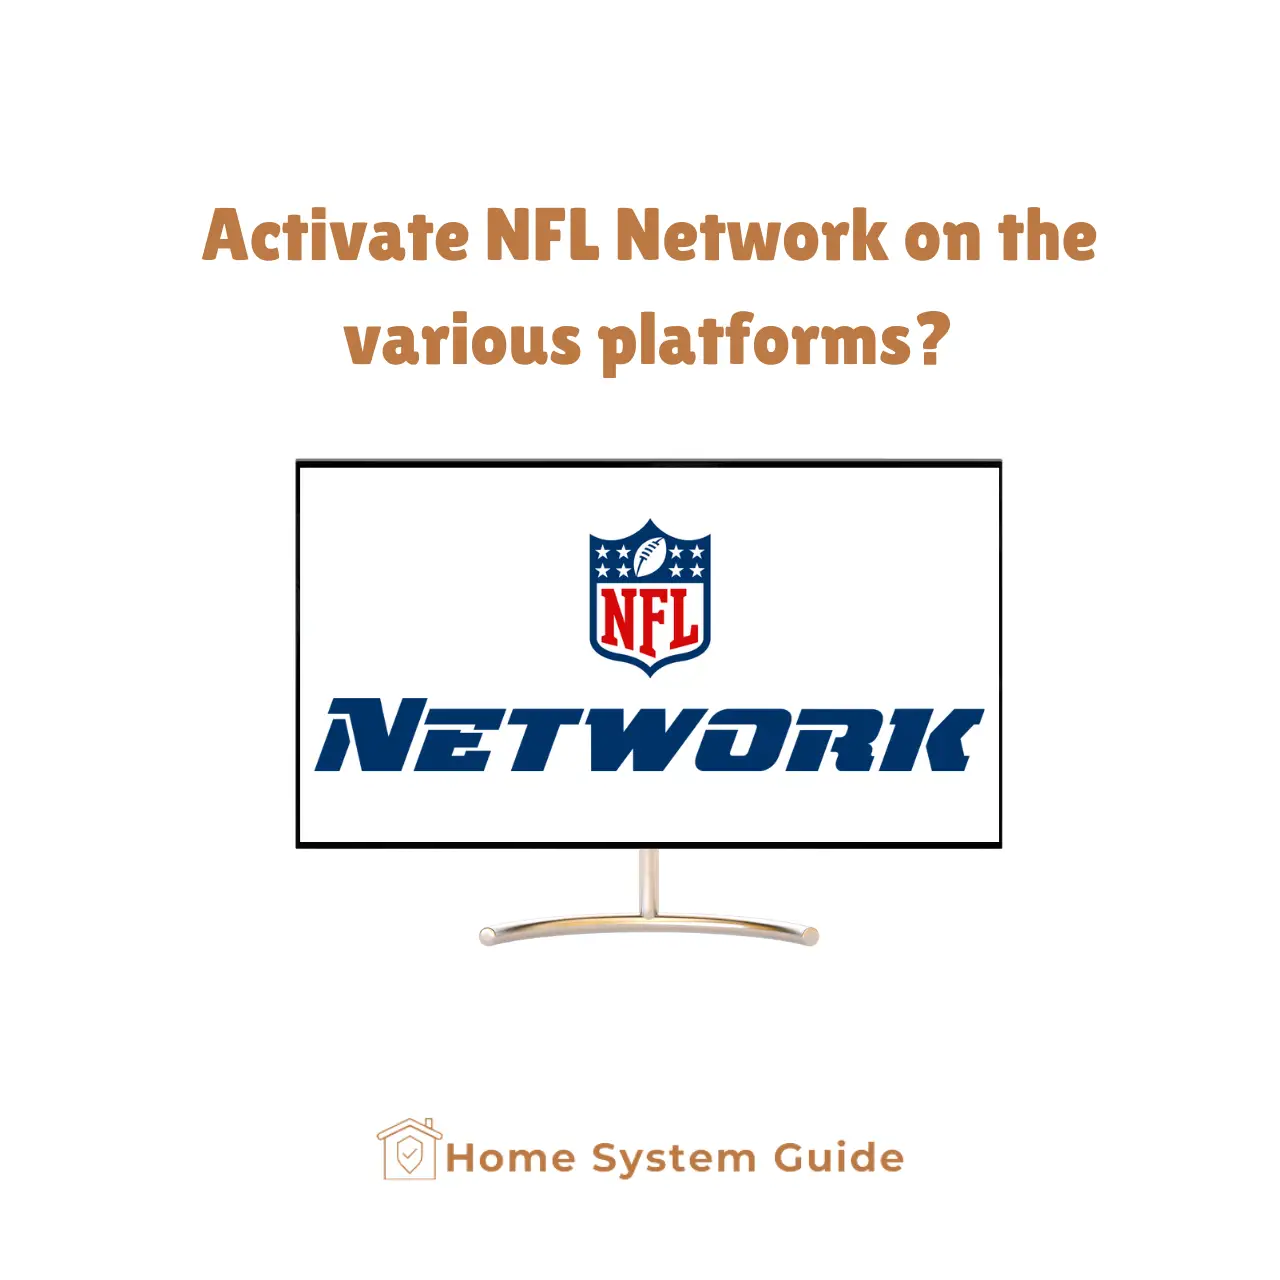 NFl Network